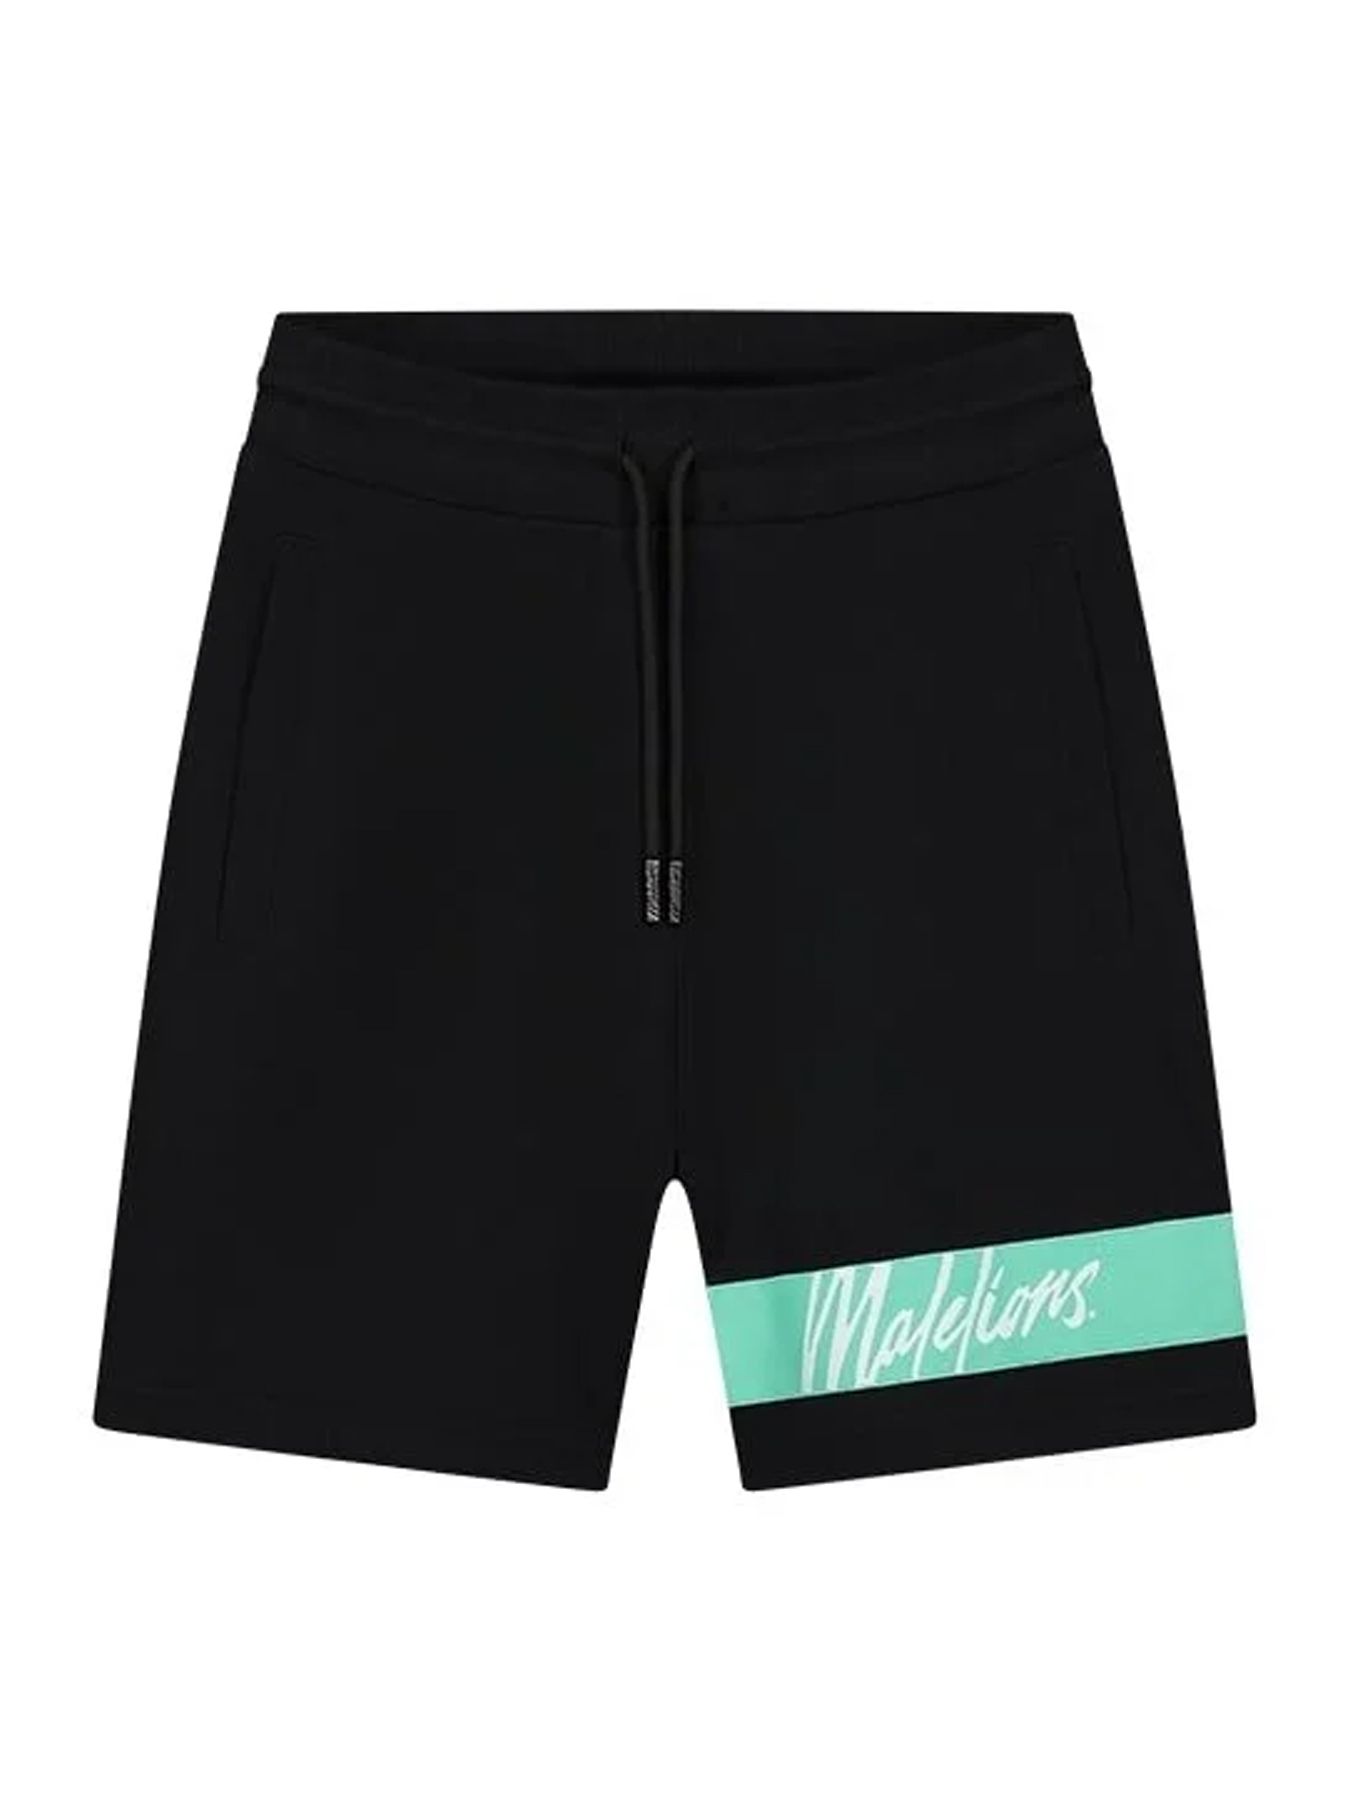 Malelions Men Captain shorts Black/Turquoise 00108668-924